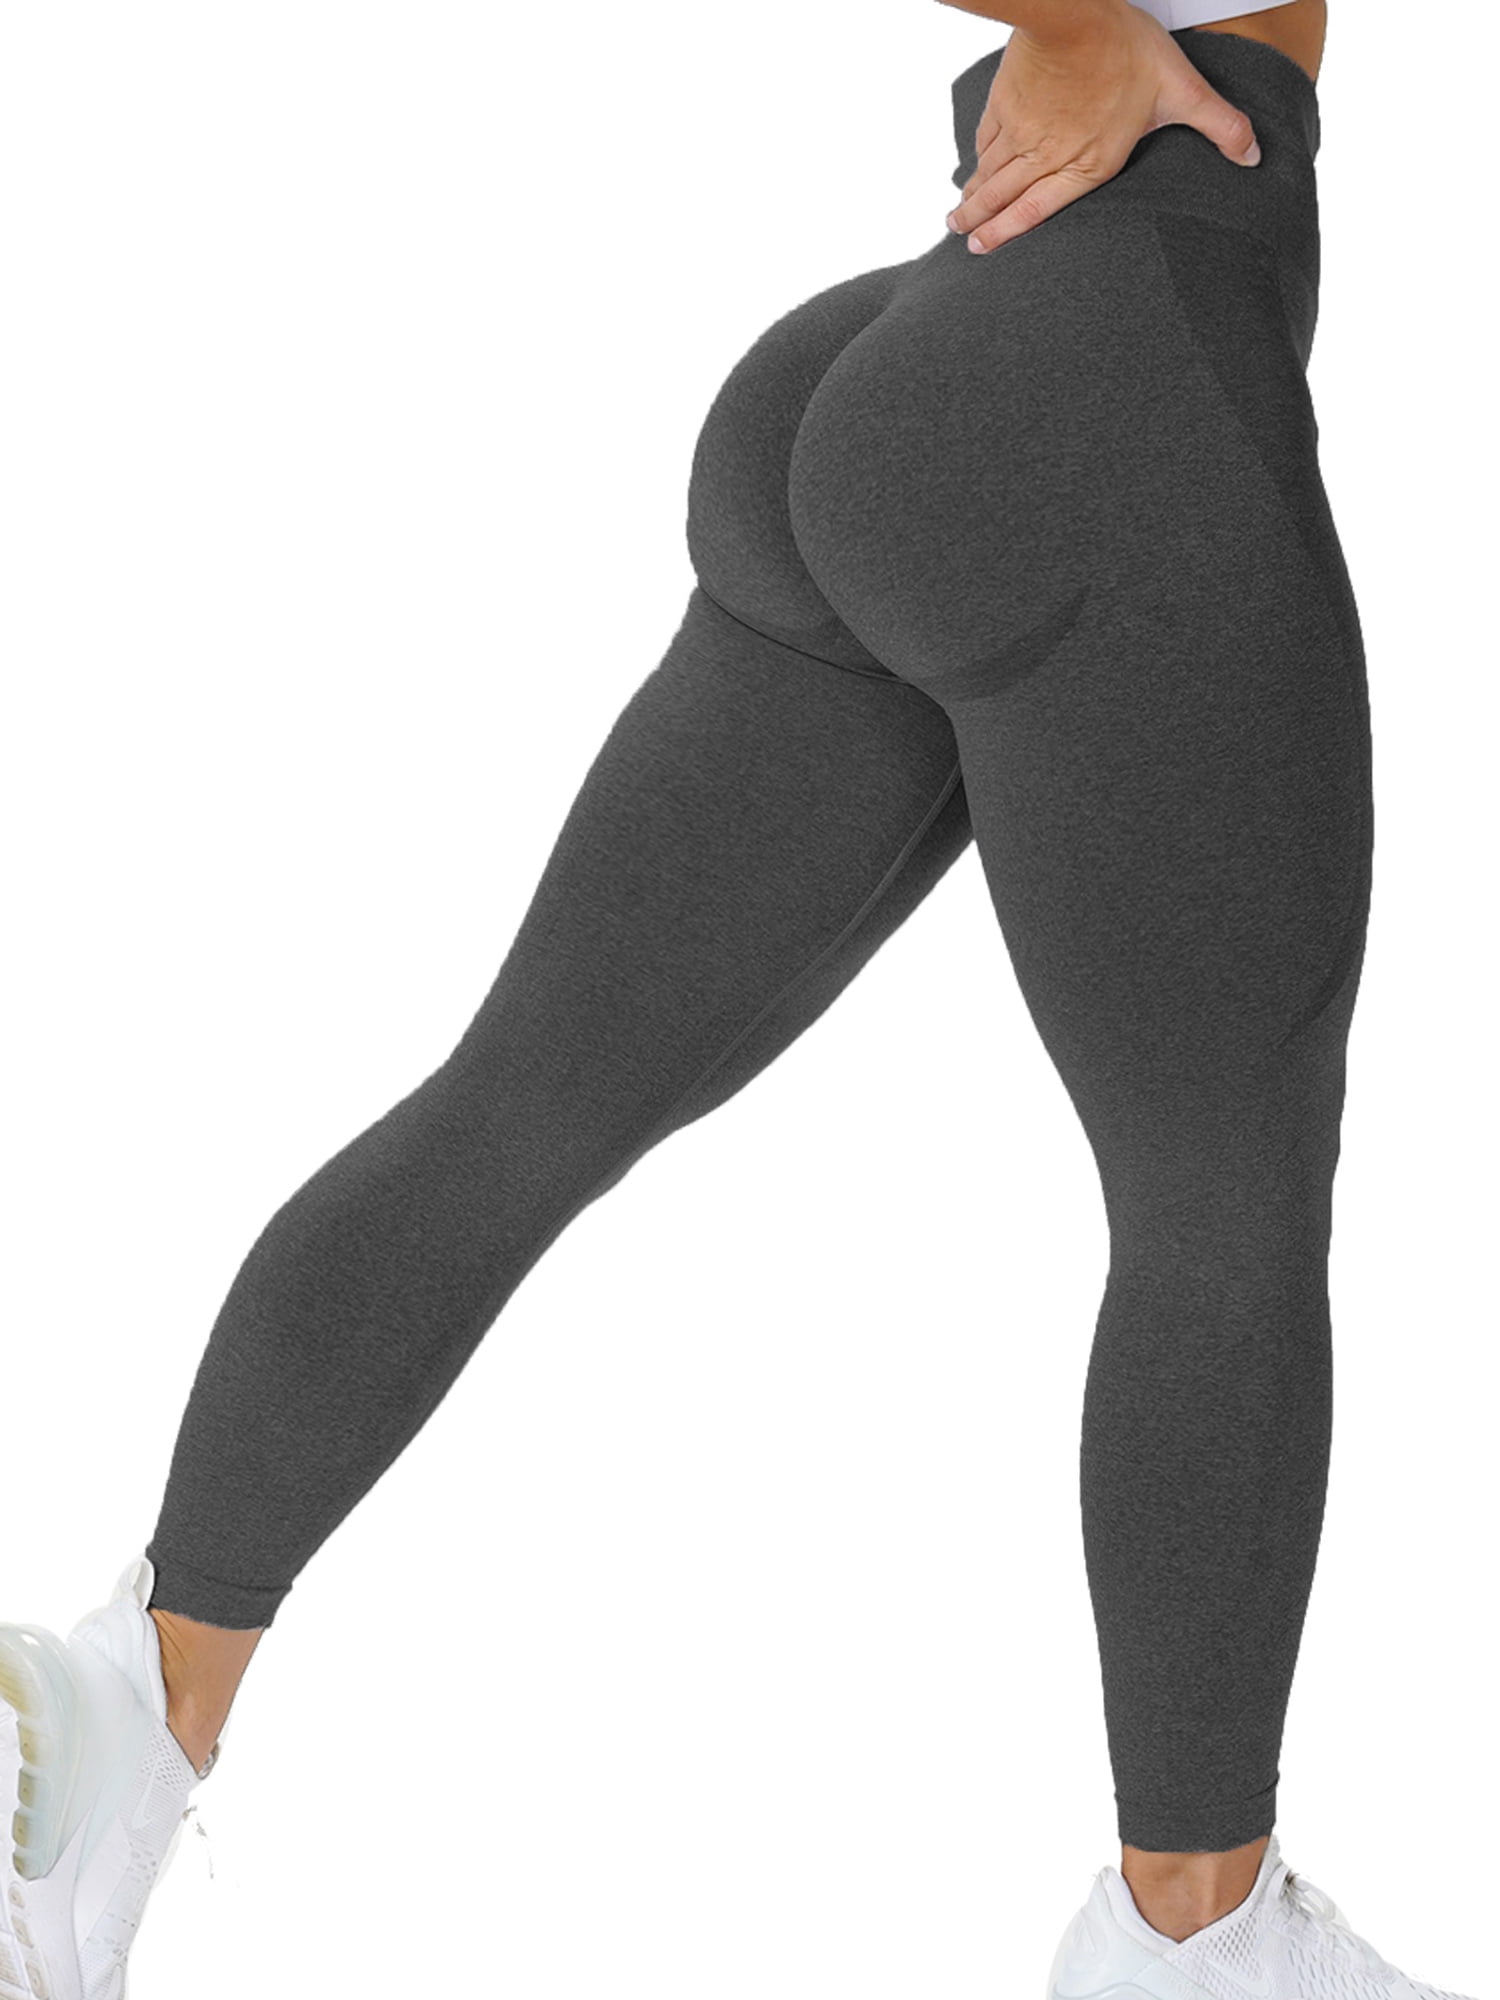 NVGTN Contour 2.0 Seamless Leggings Olive Pants for Running Yoga Workout  Women High Waist Seamless Workout Leggings Yoga Pants - AliExpress